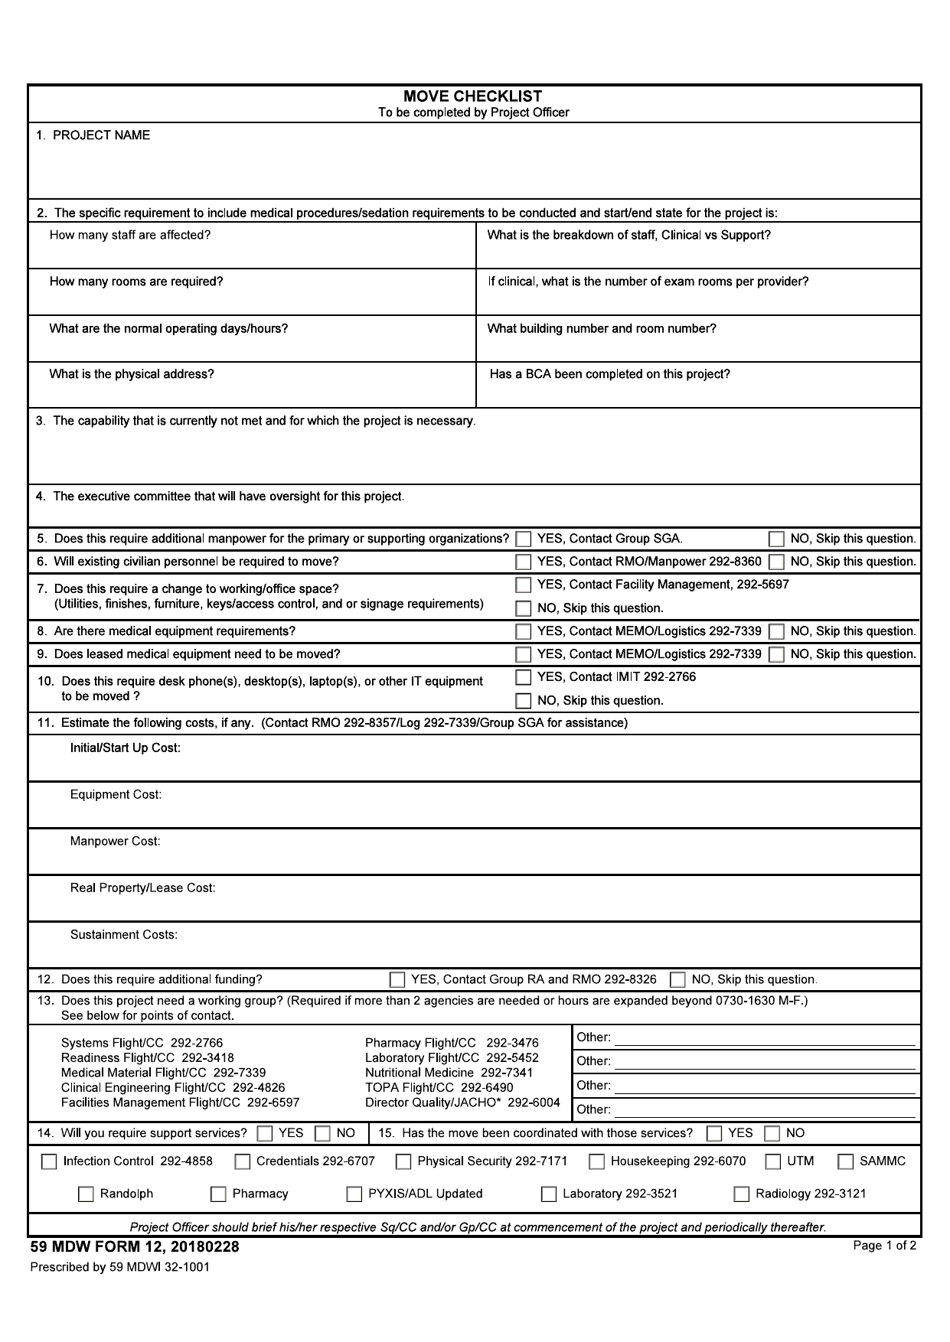 59 MDW Form 12 Move Checklist, Page 1